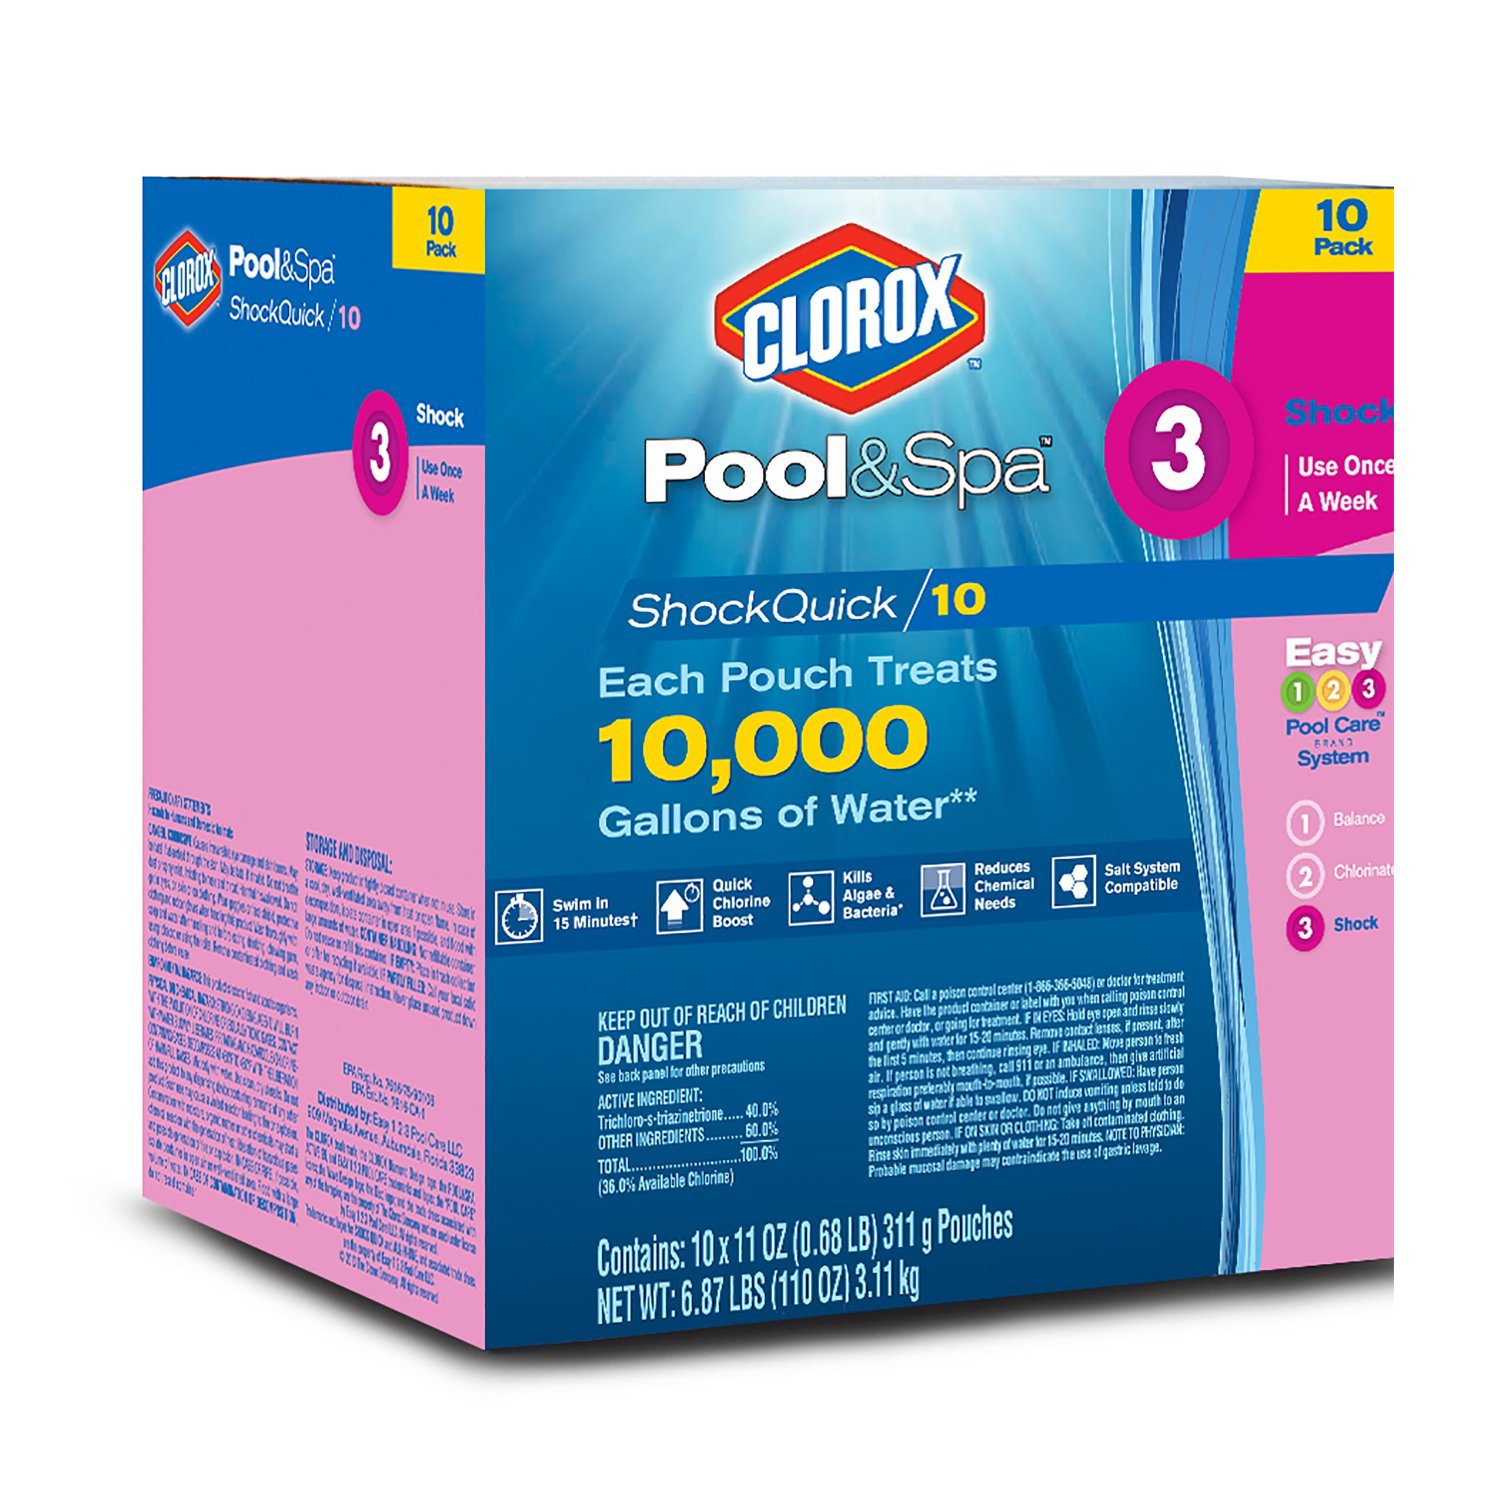 Clorox Pool & Spa pH Down - Shop Pool Maintenance at H-E-B